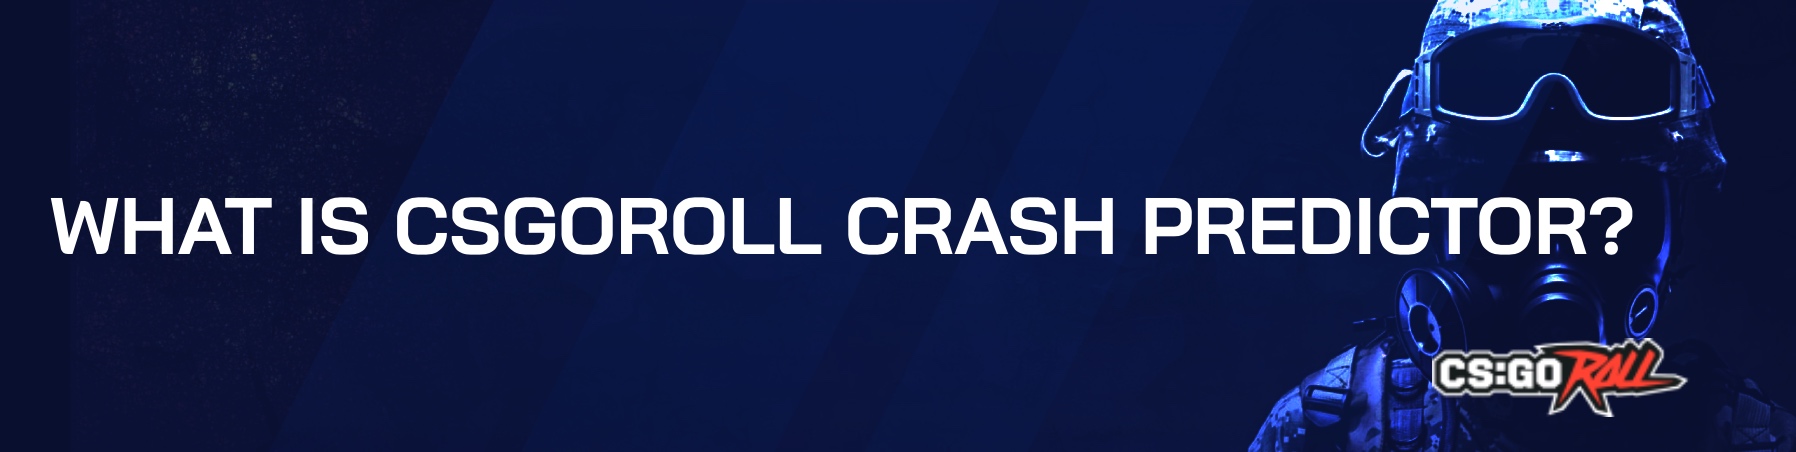 What is CSGORoll Crash Predictor?